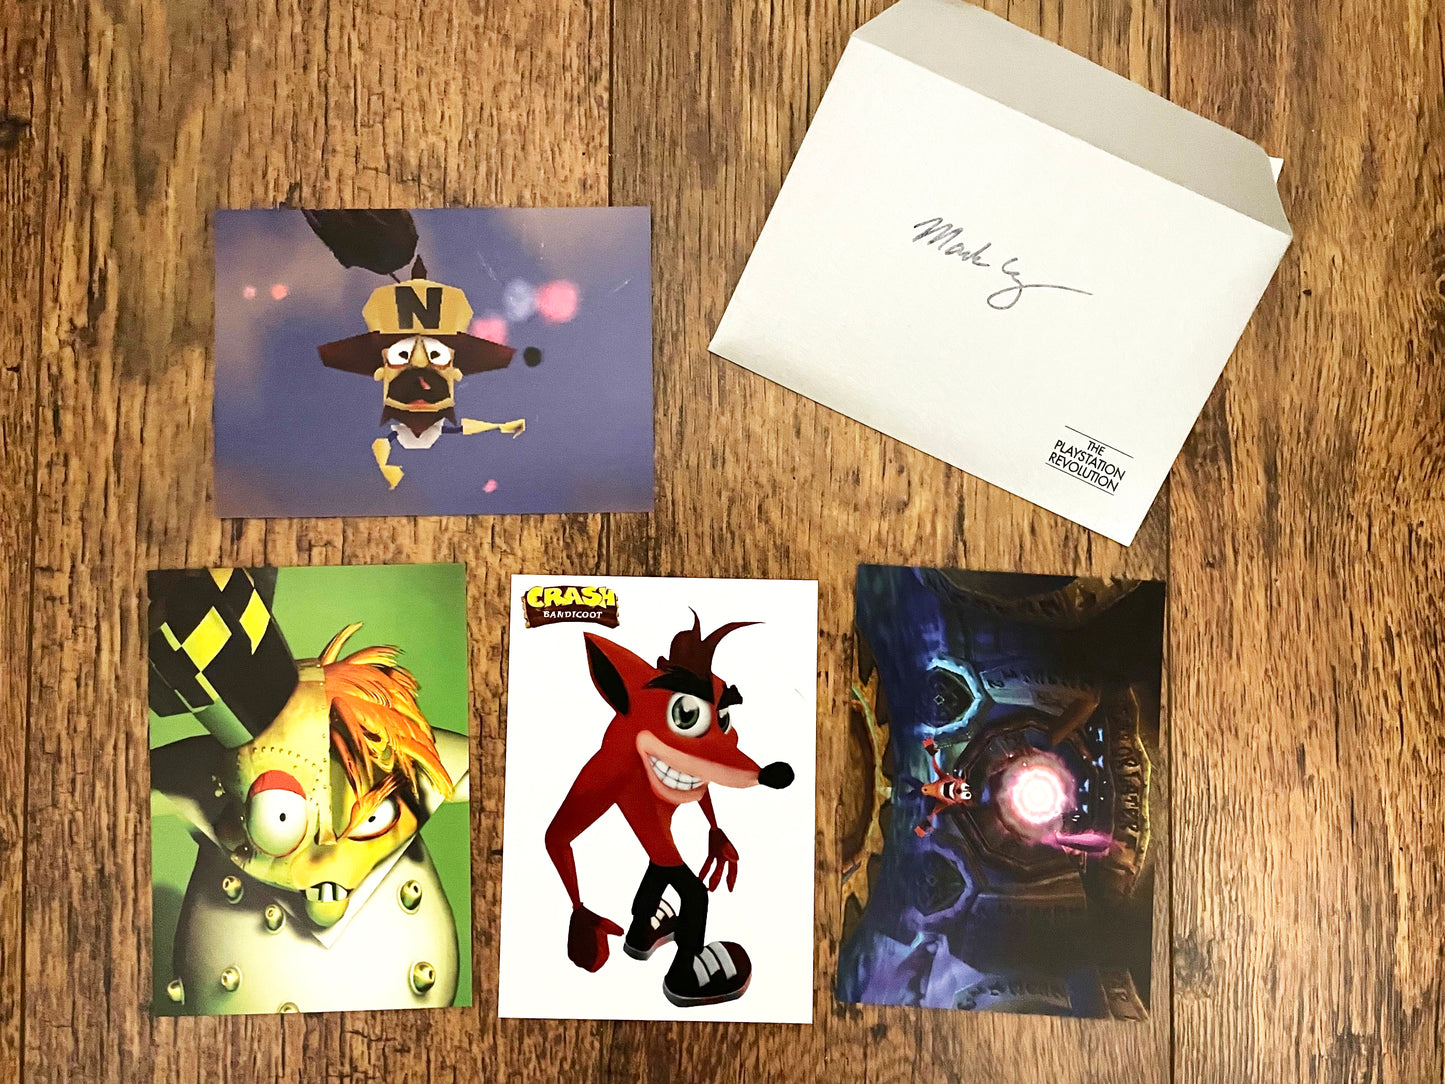 Crash Bandicoot 'Signed' 4 x A6 postcard set - by Mark Cerny